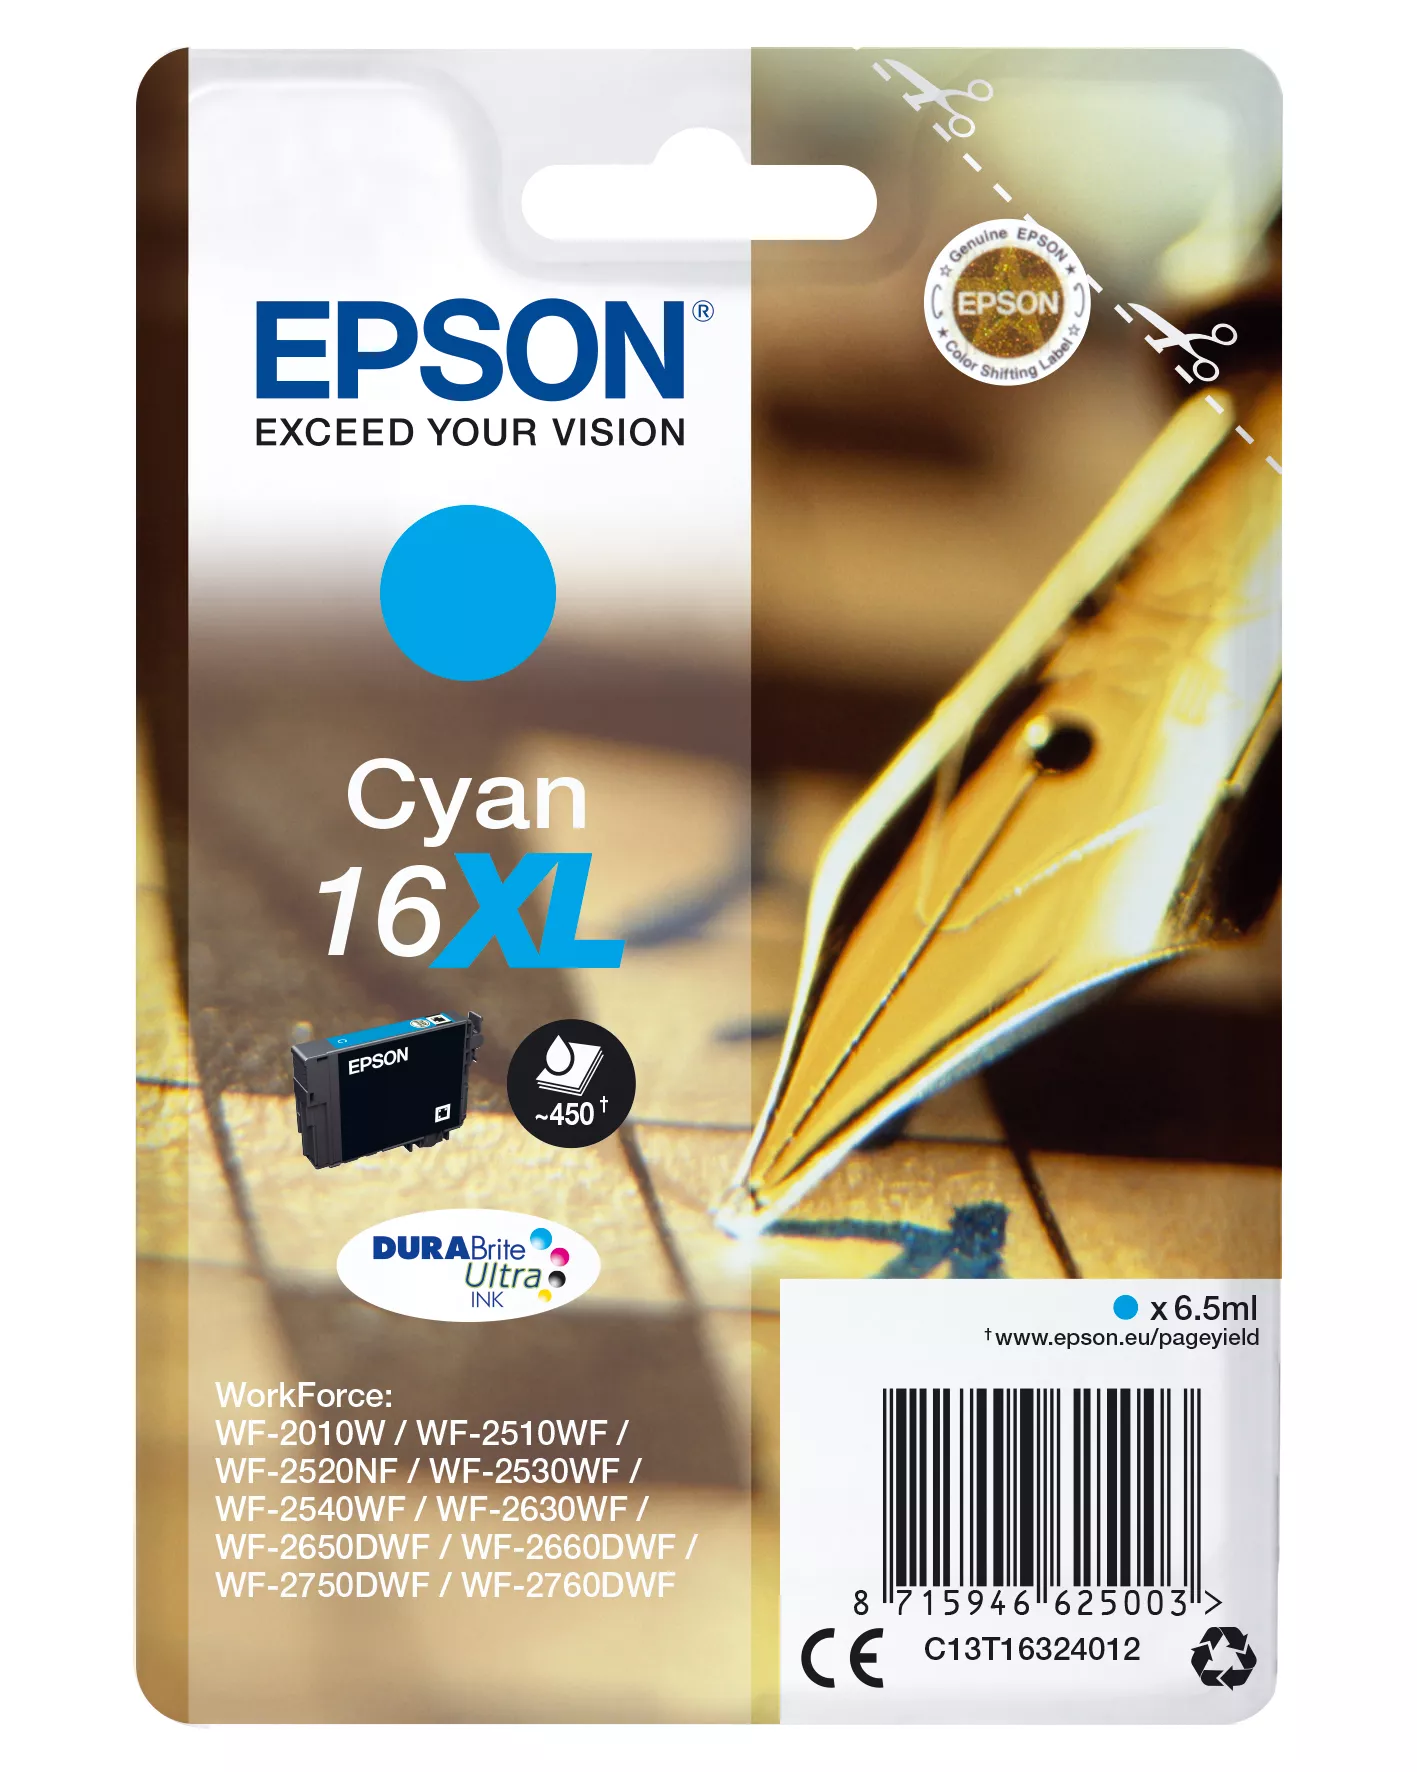 Vente Cartouches d'encre EPSON 16XL cartouche dencre cyan haute capacité 6.5ml 450